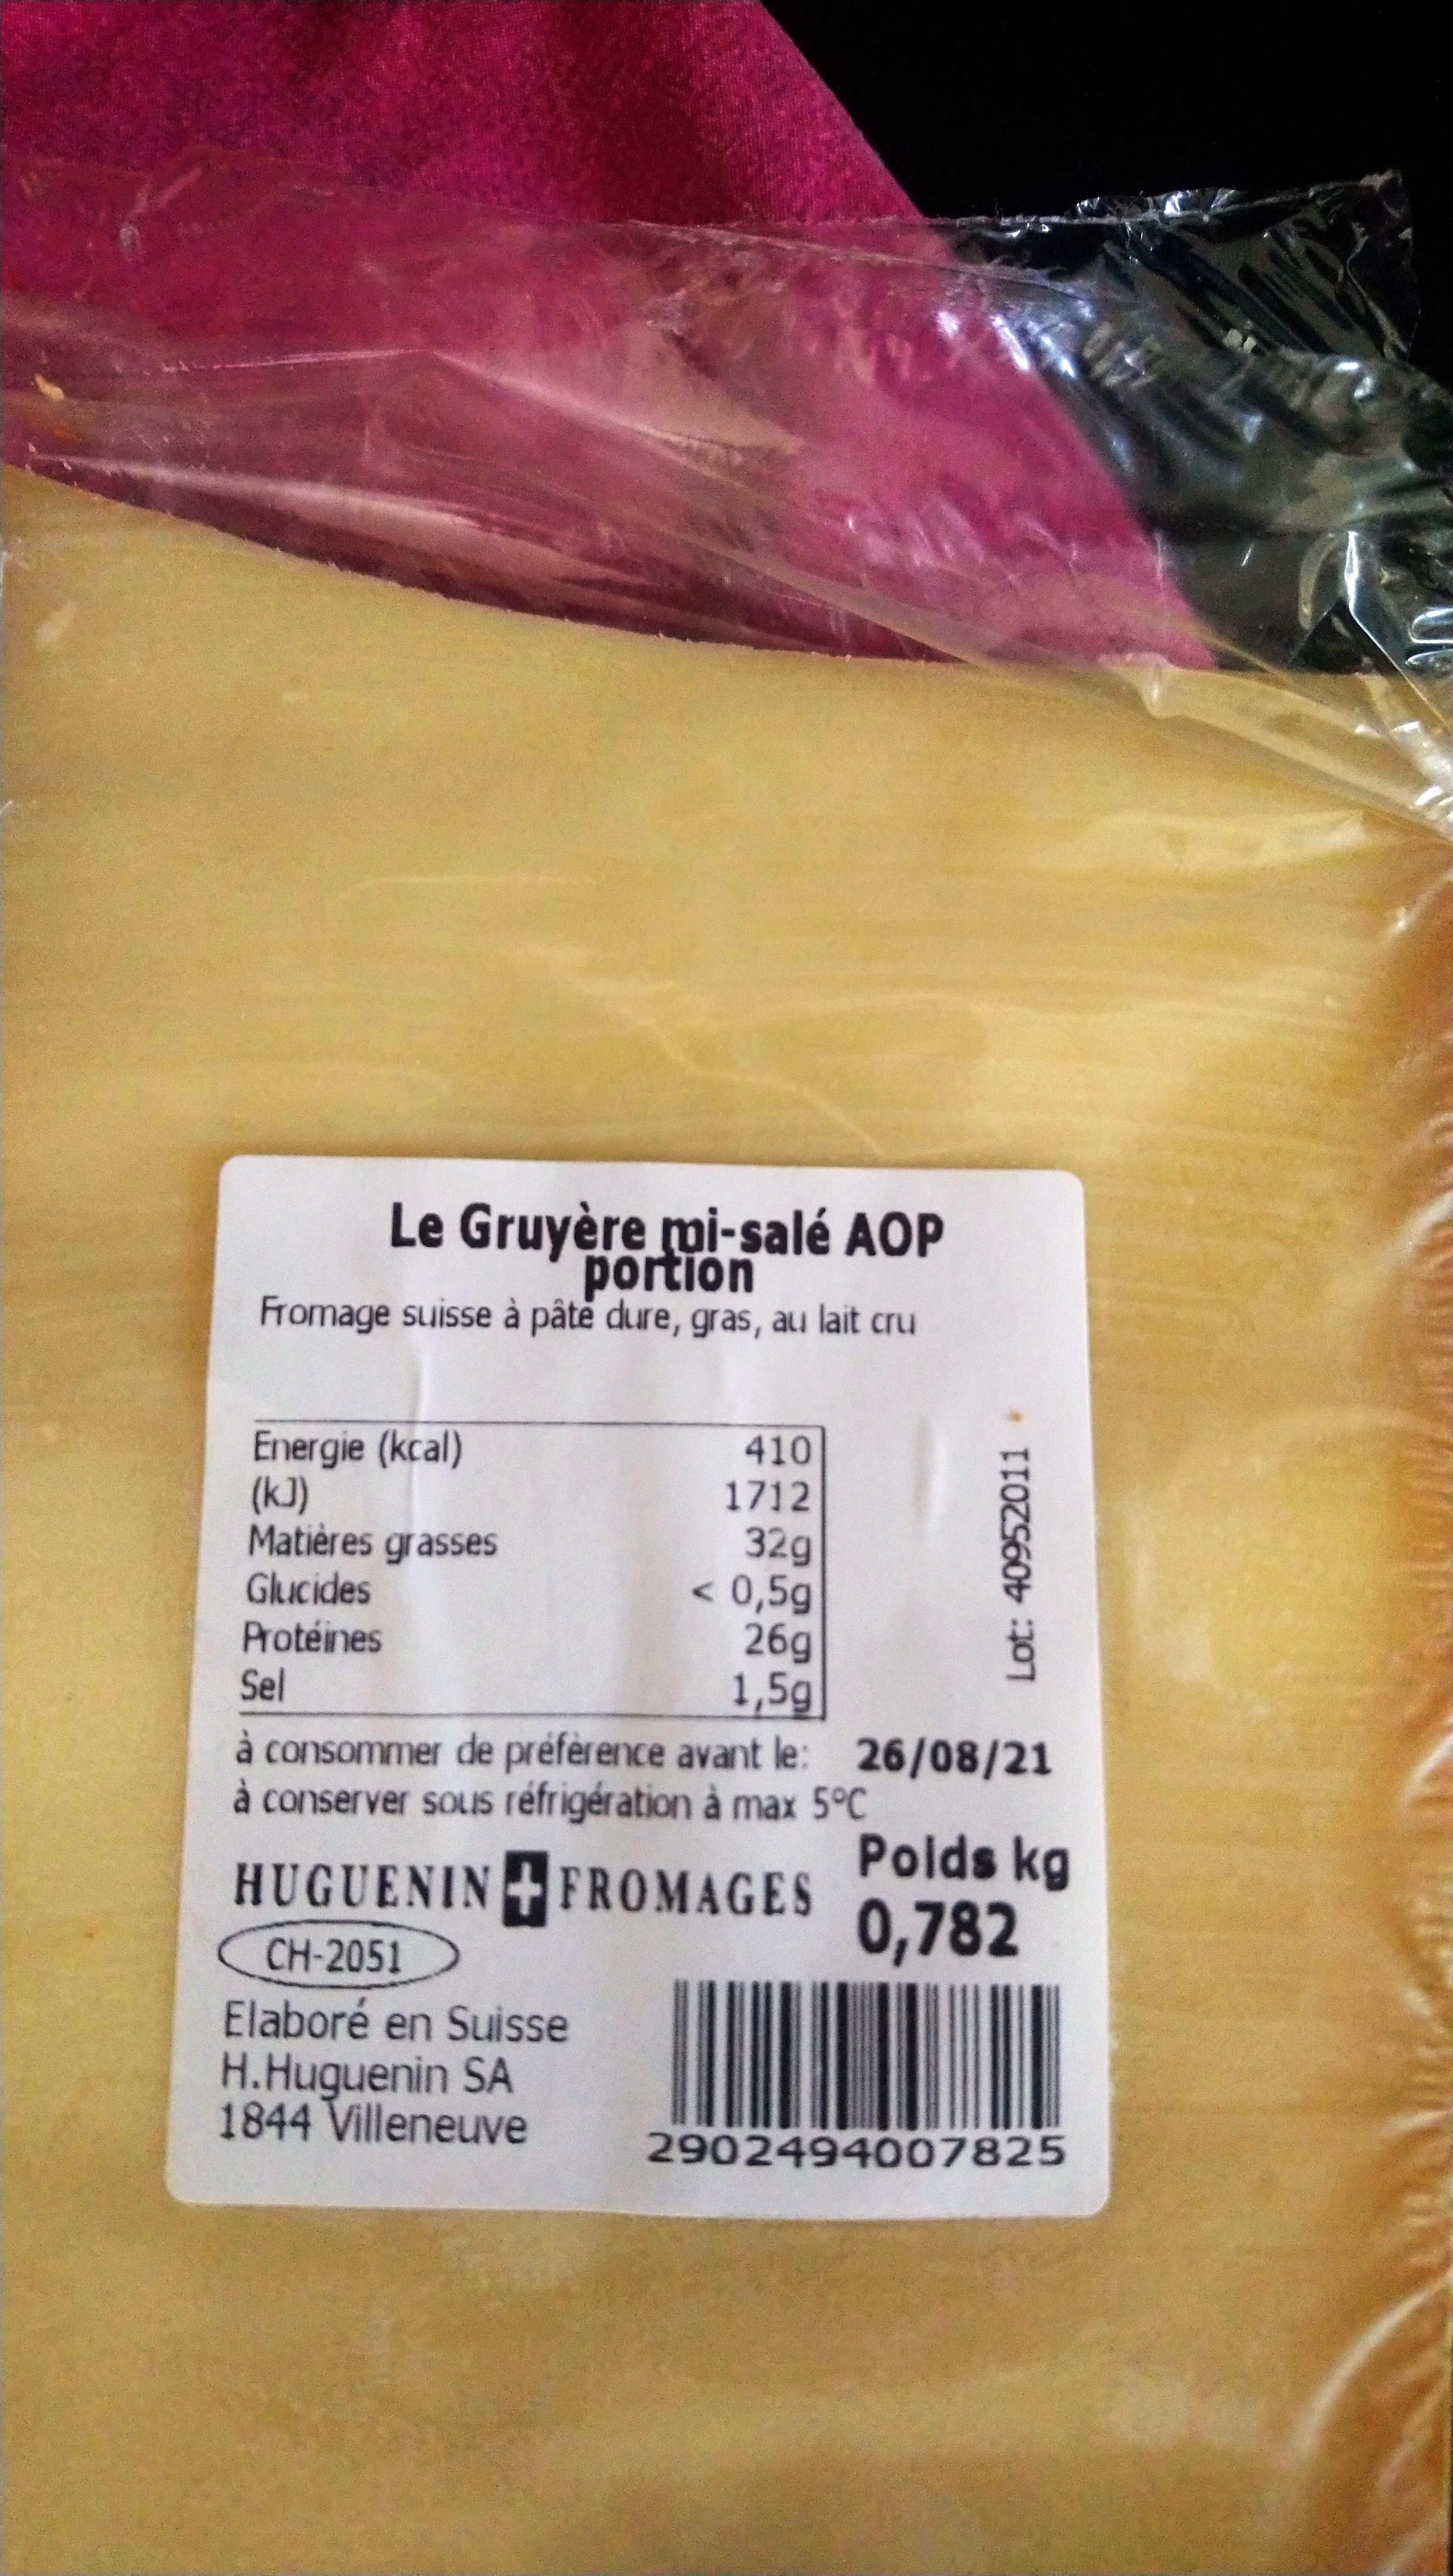 Gruyere mi-sale AOP - Ingredients - fr